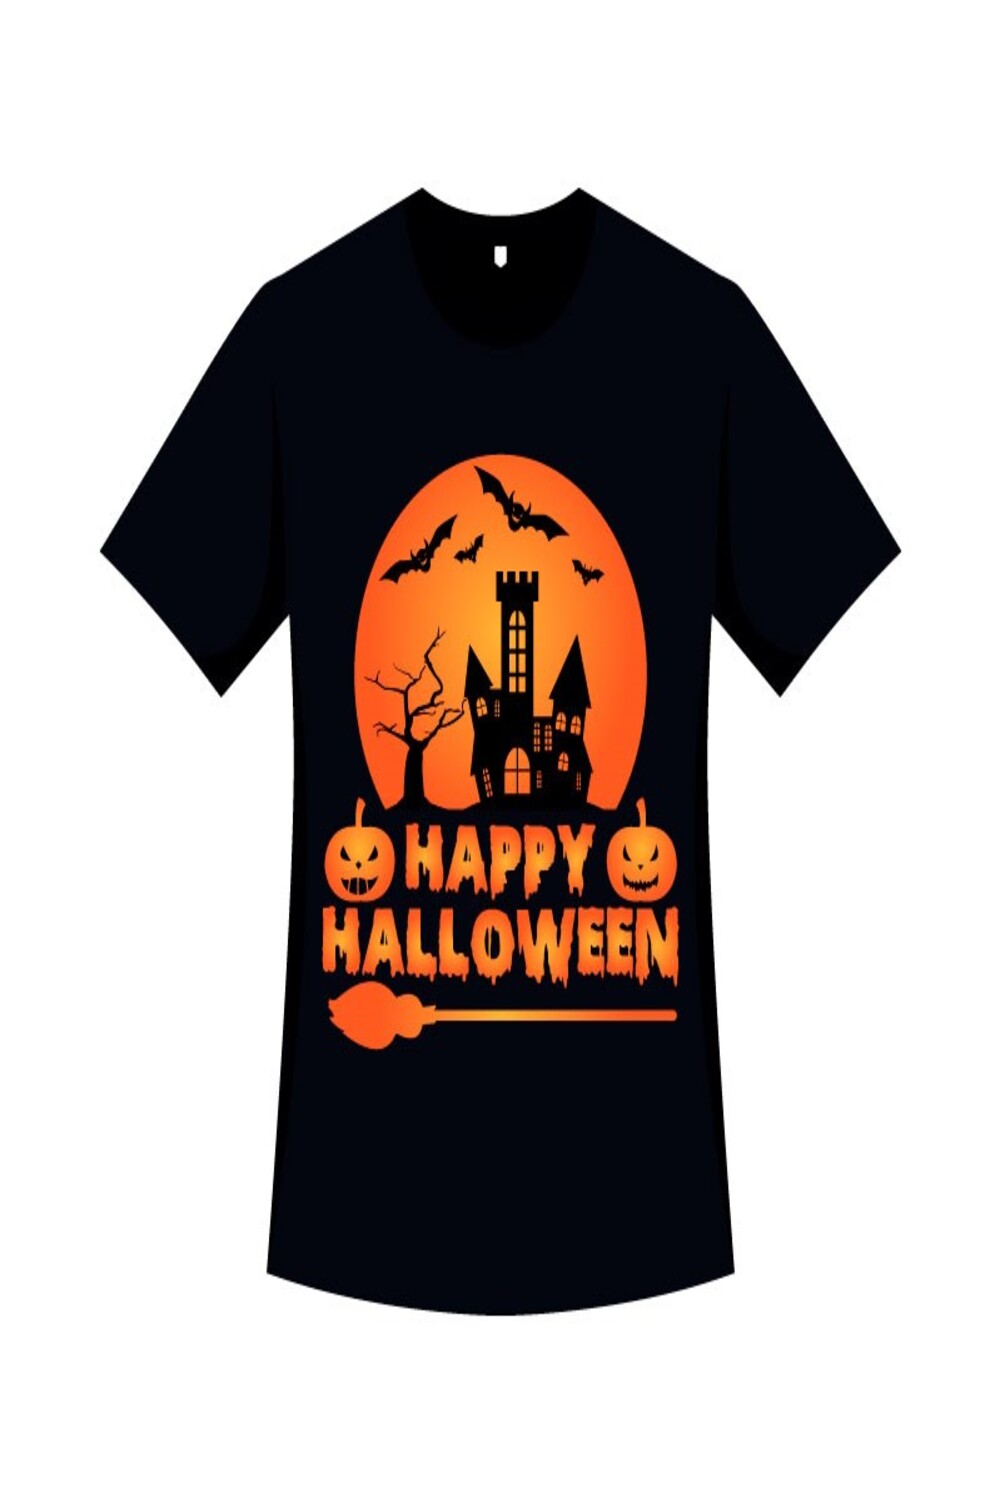 Halloween Stylish T-shirt SVG Pinterest image.